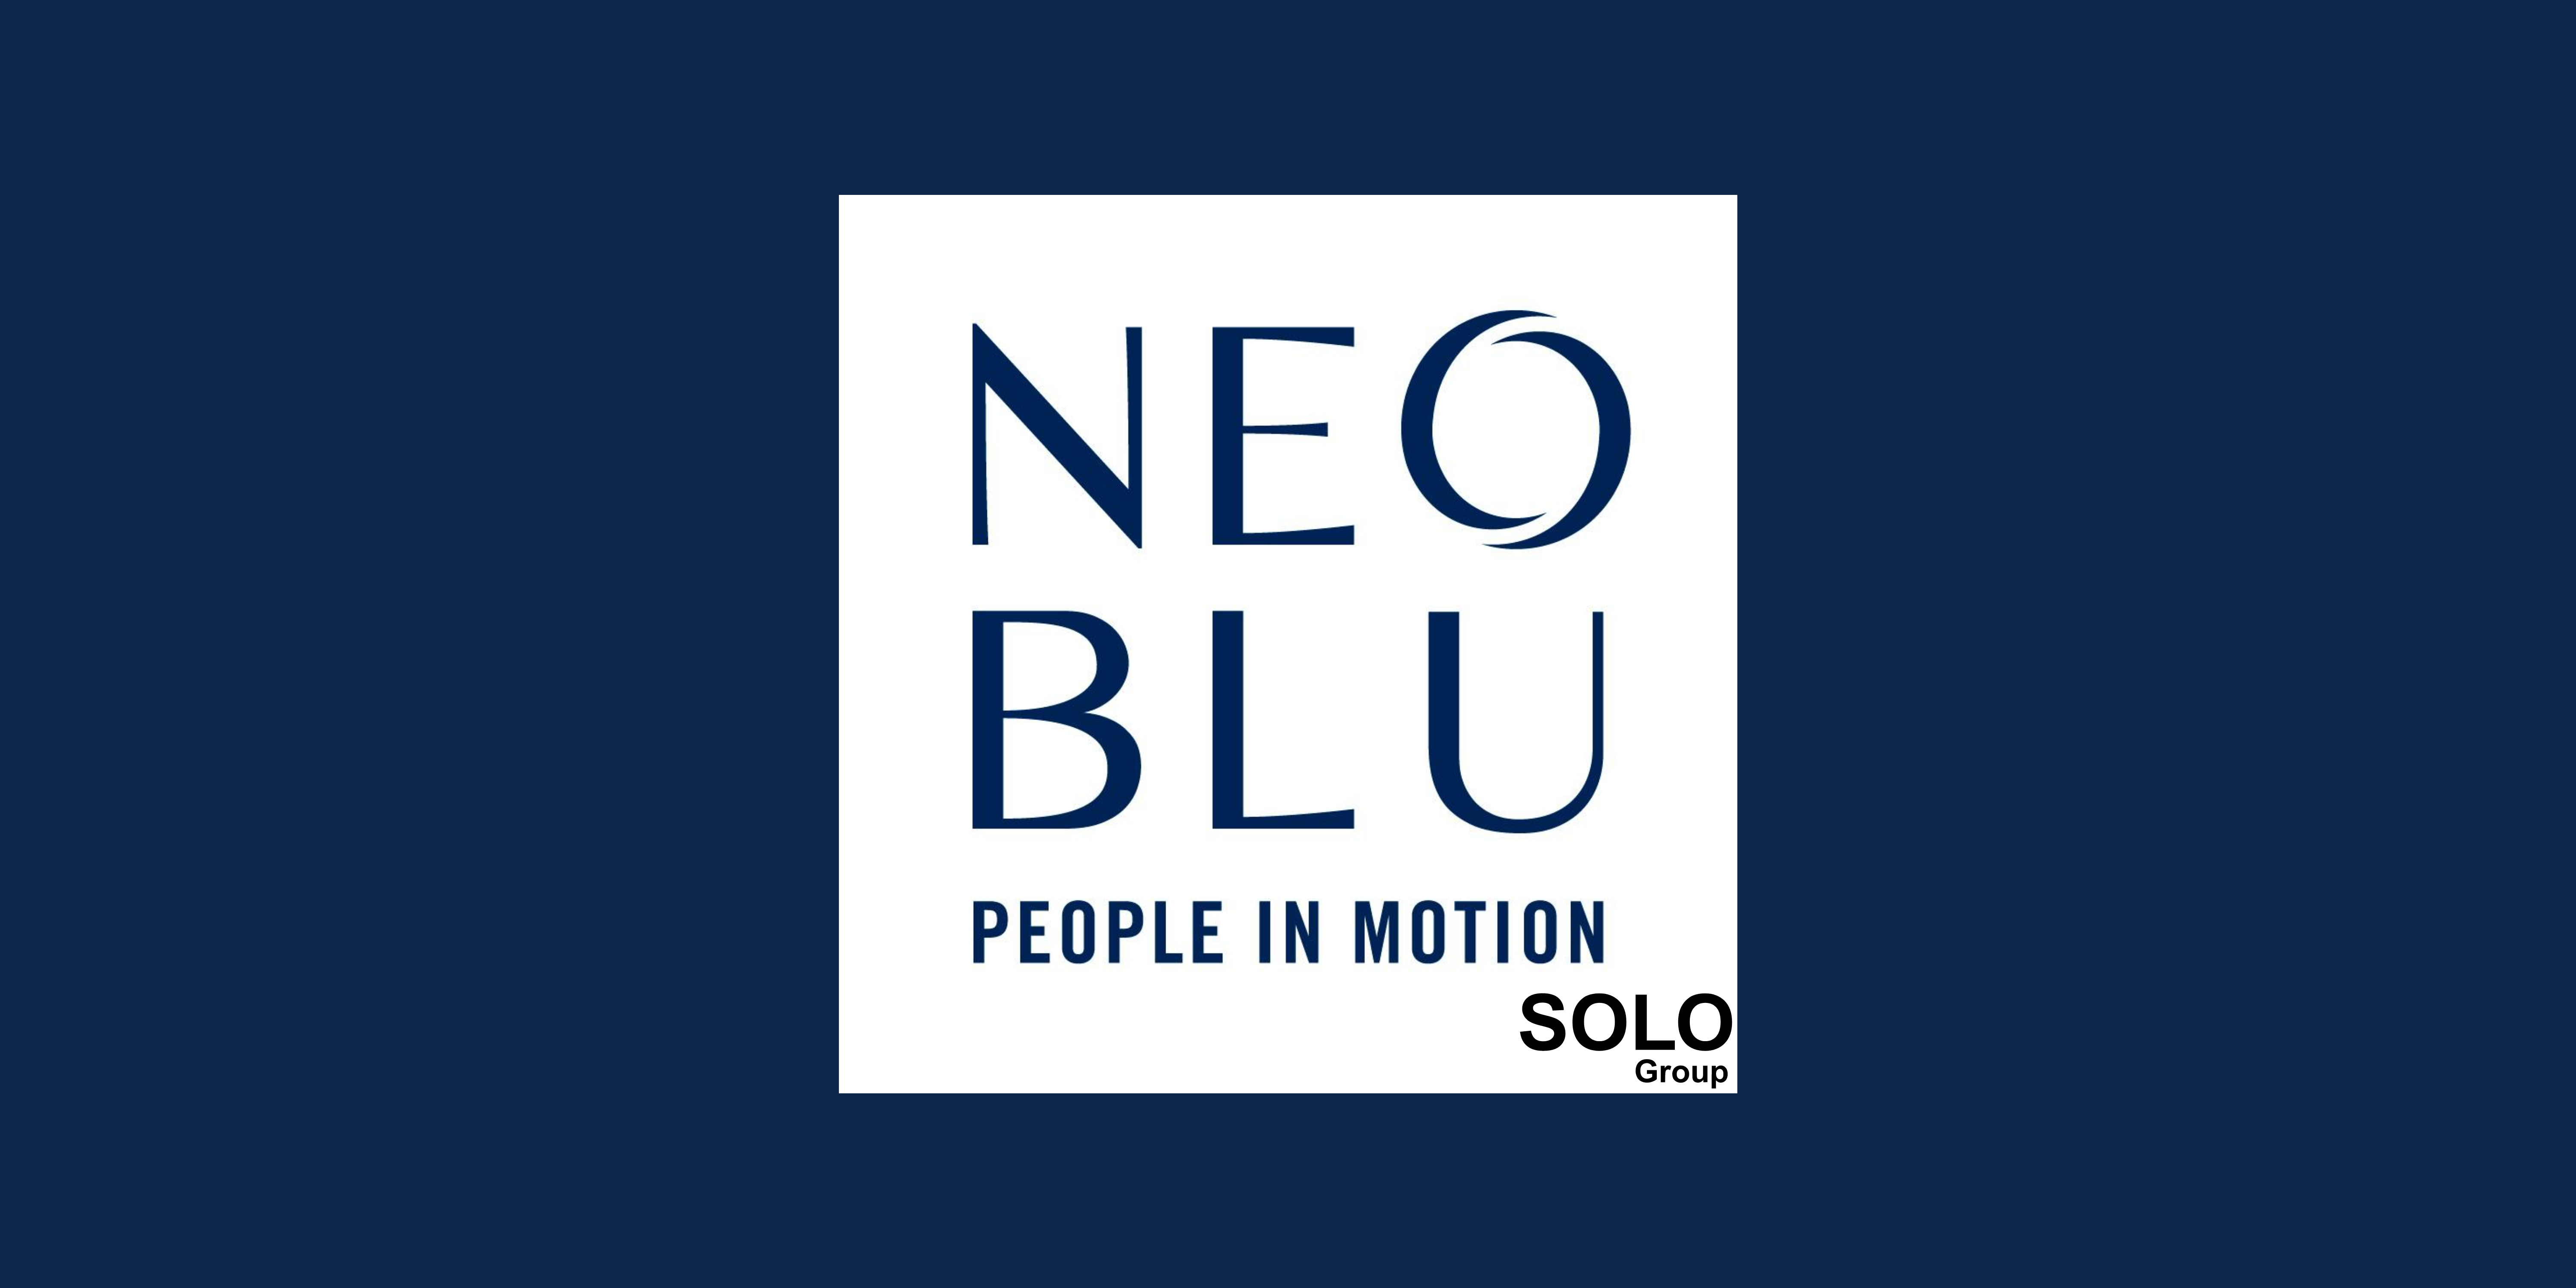 SOLO GROUP PRESENTS ITS NEW BRAND: NEOBLU